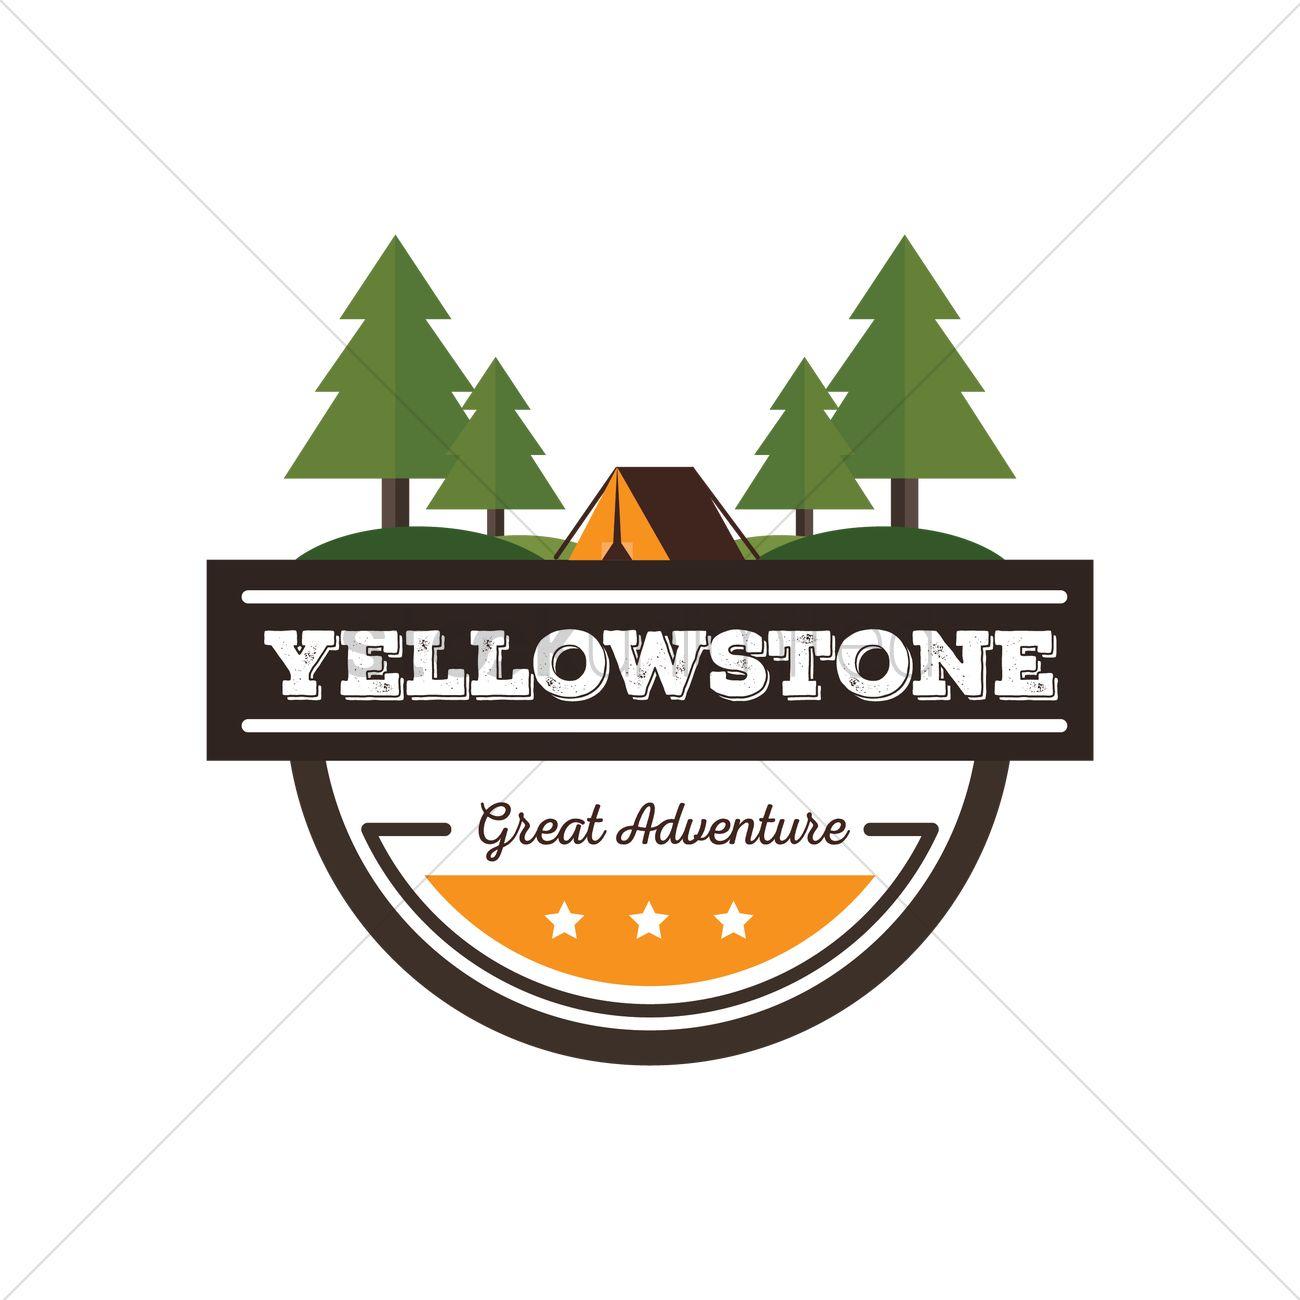 Yellowstone Logo - Free Yellowstone label Vector Image - 1547874 | StockUnlimited